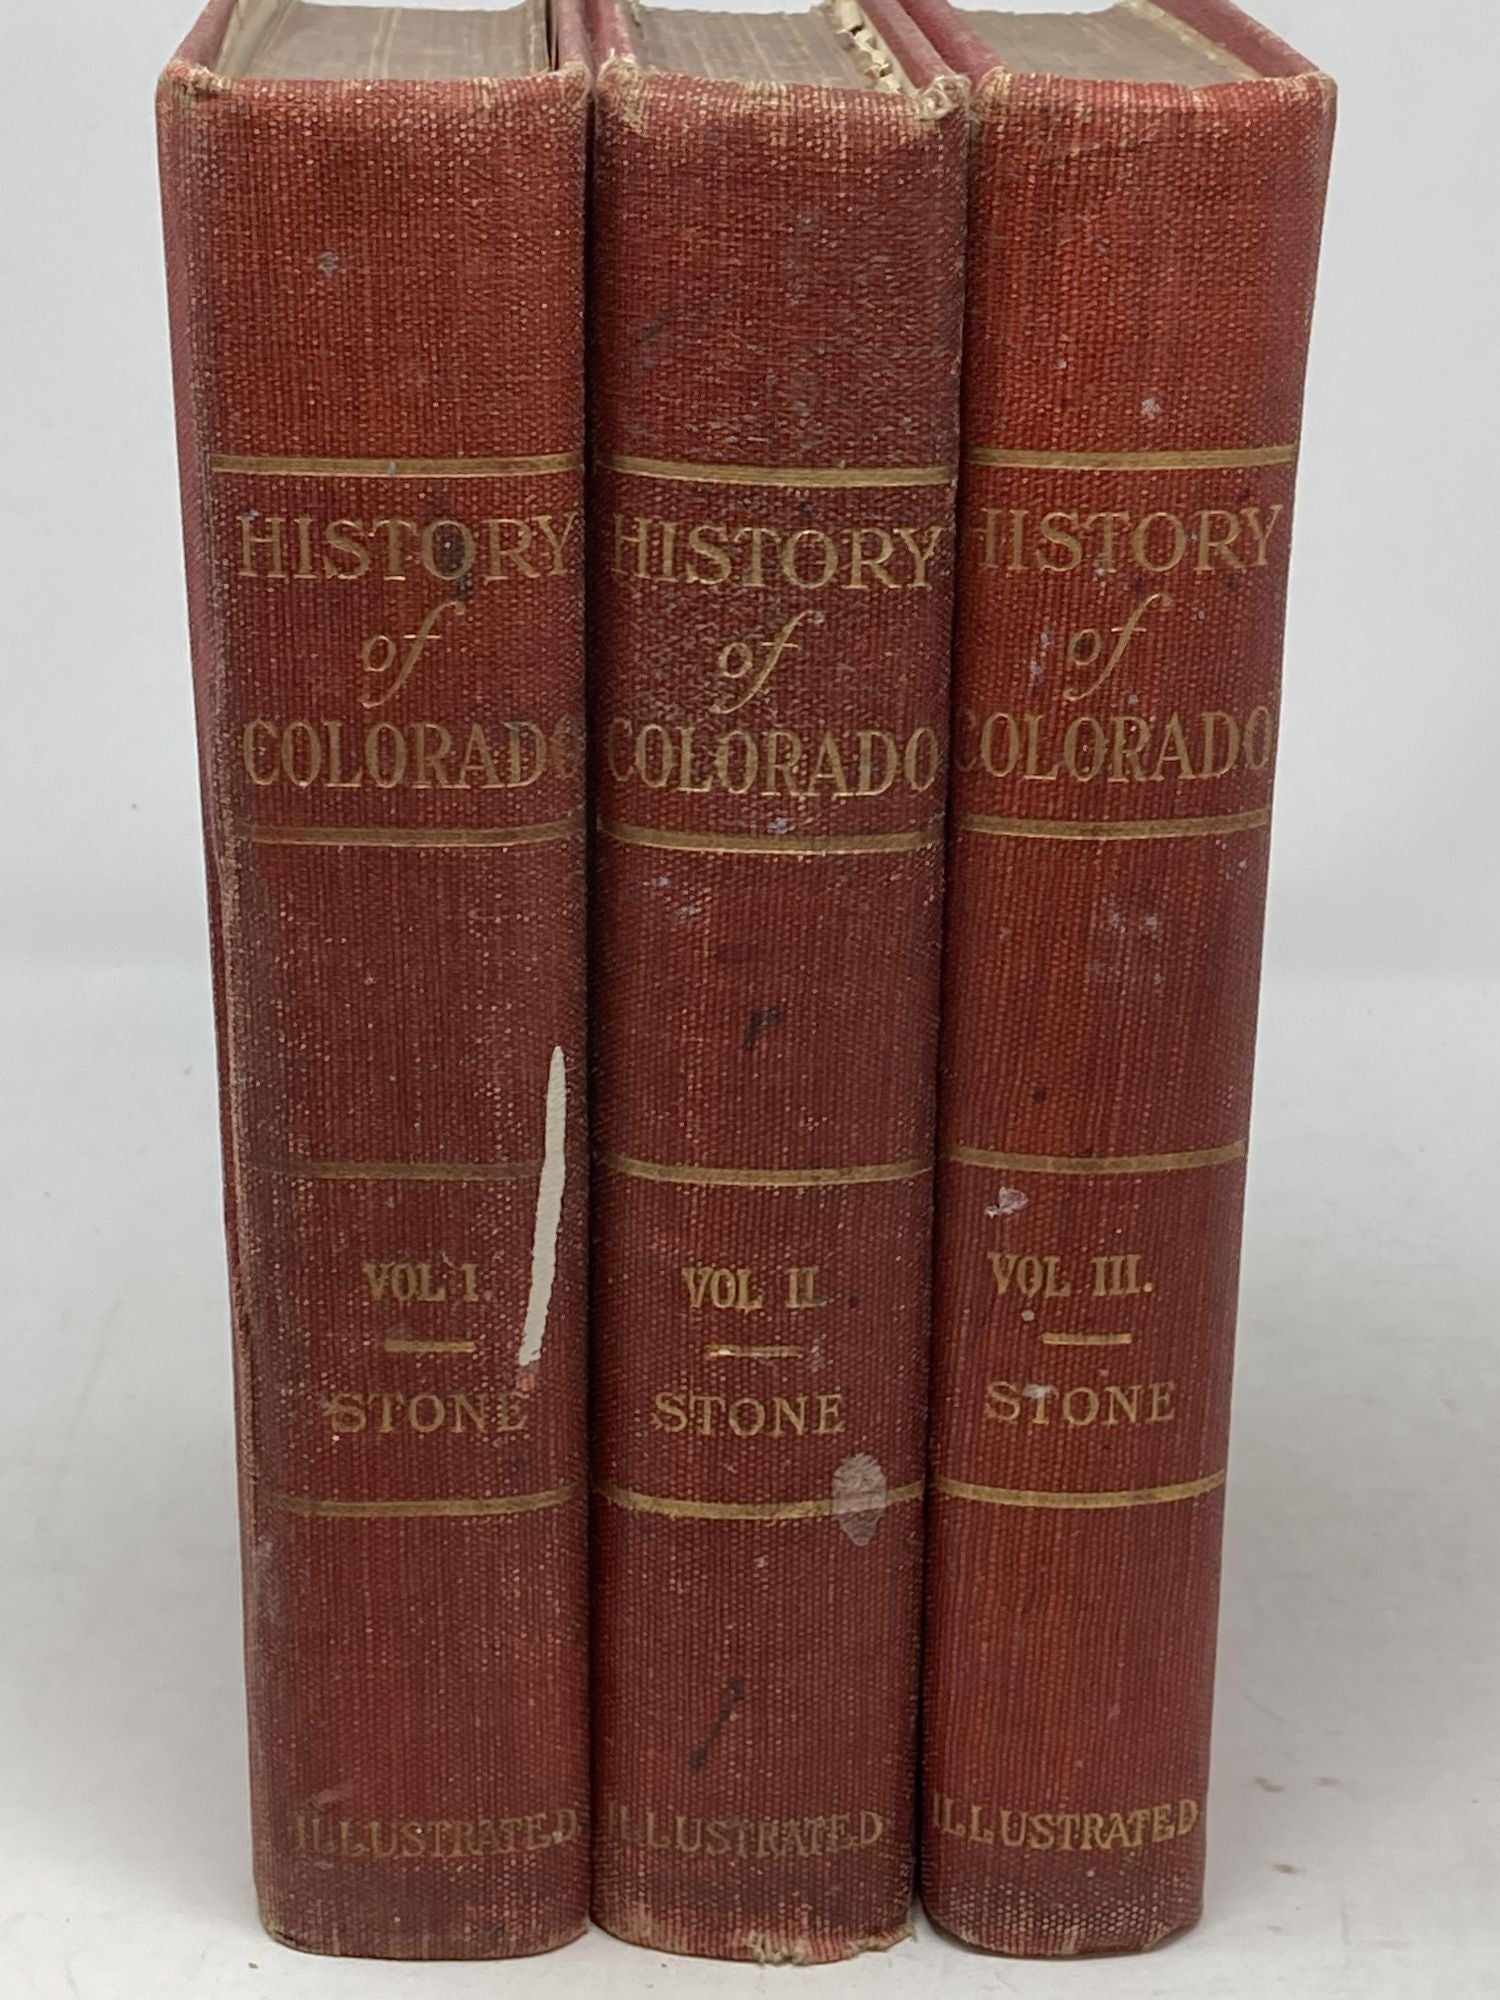 Stone, Wilbur F. - History of Colorado (Three Volumes)